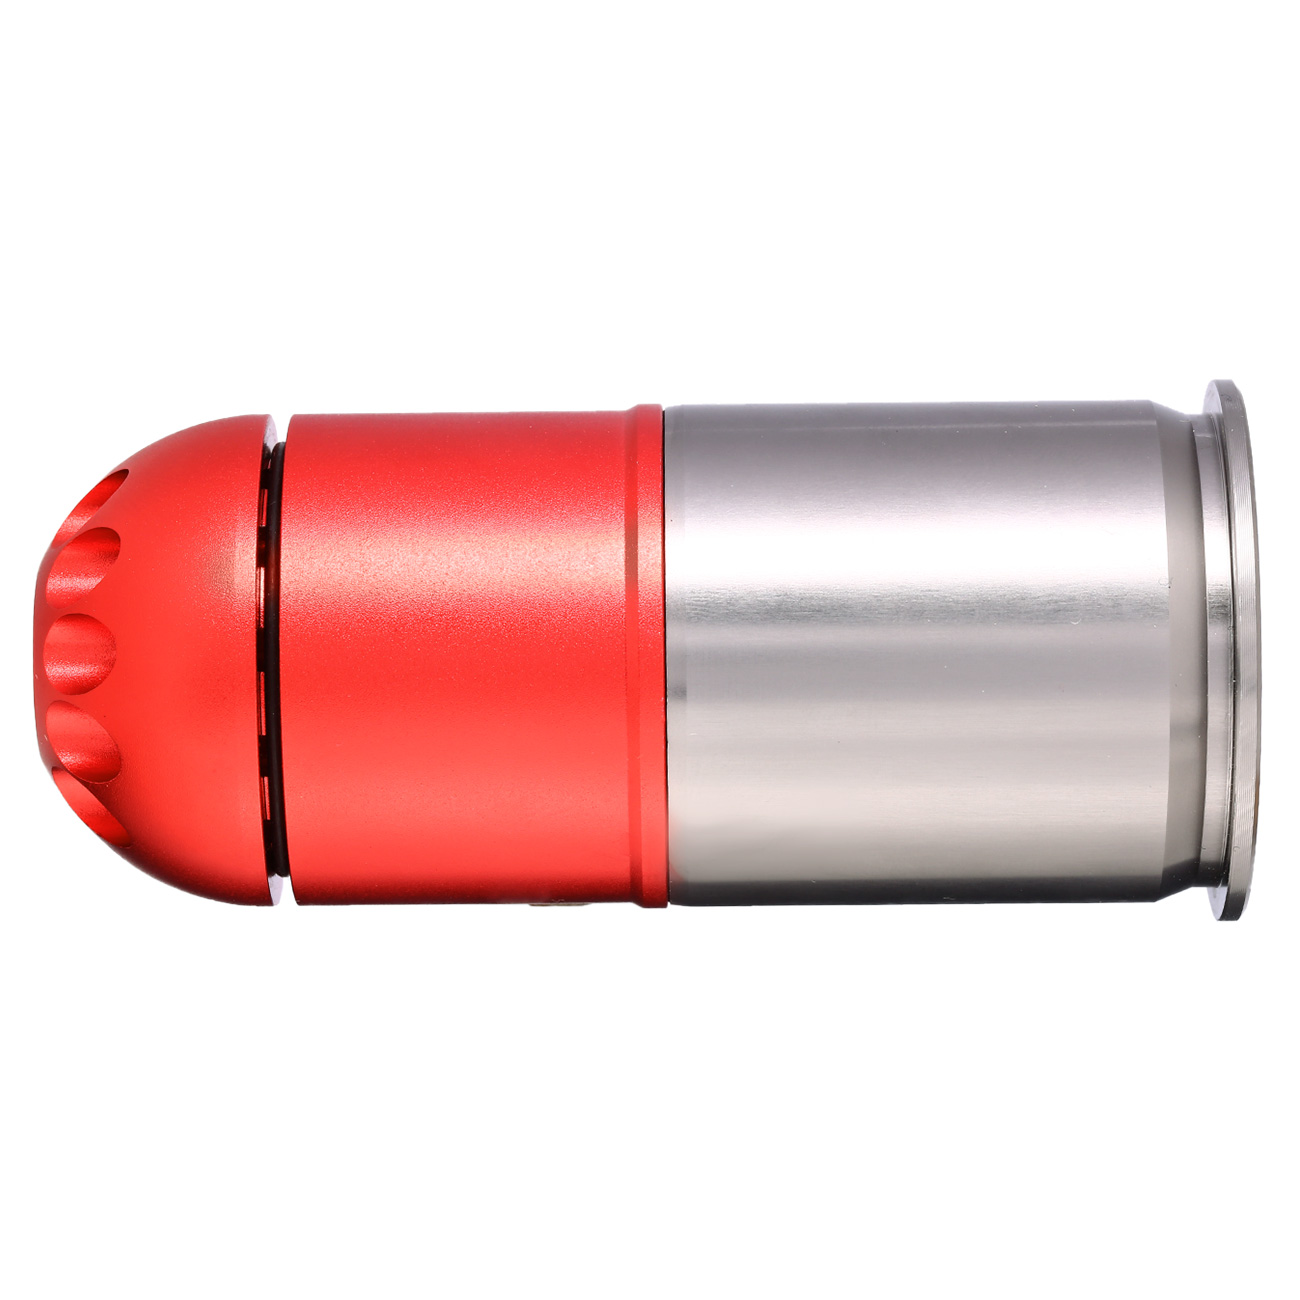 Nuprol 40mm Vollmetall Hlse / Einlegepatrone f. 96 6mm BBs rot - 3 Stck Bild 2